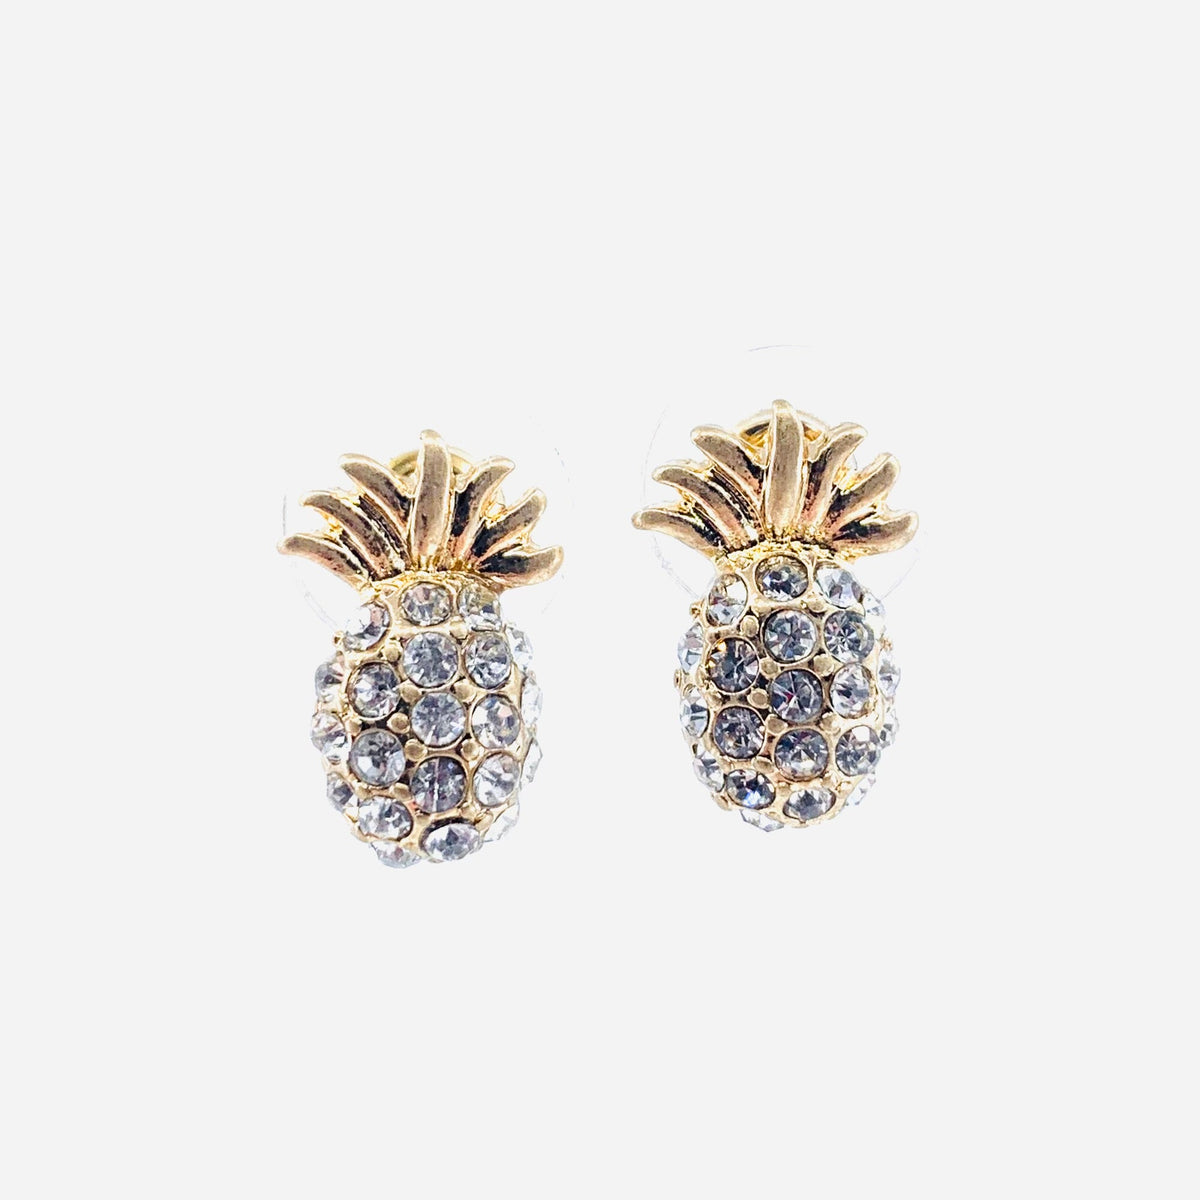 Rhinestone Pineapple Earrings Jewelry Cloie NY Gold 